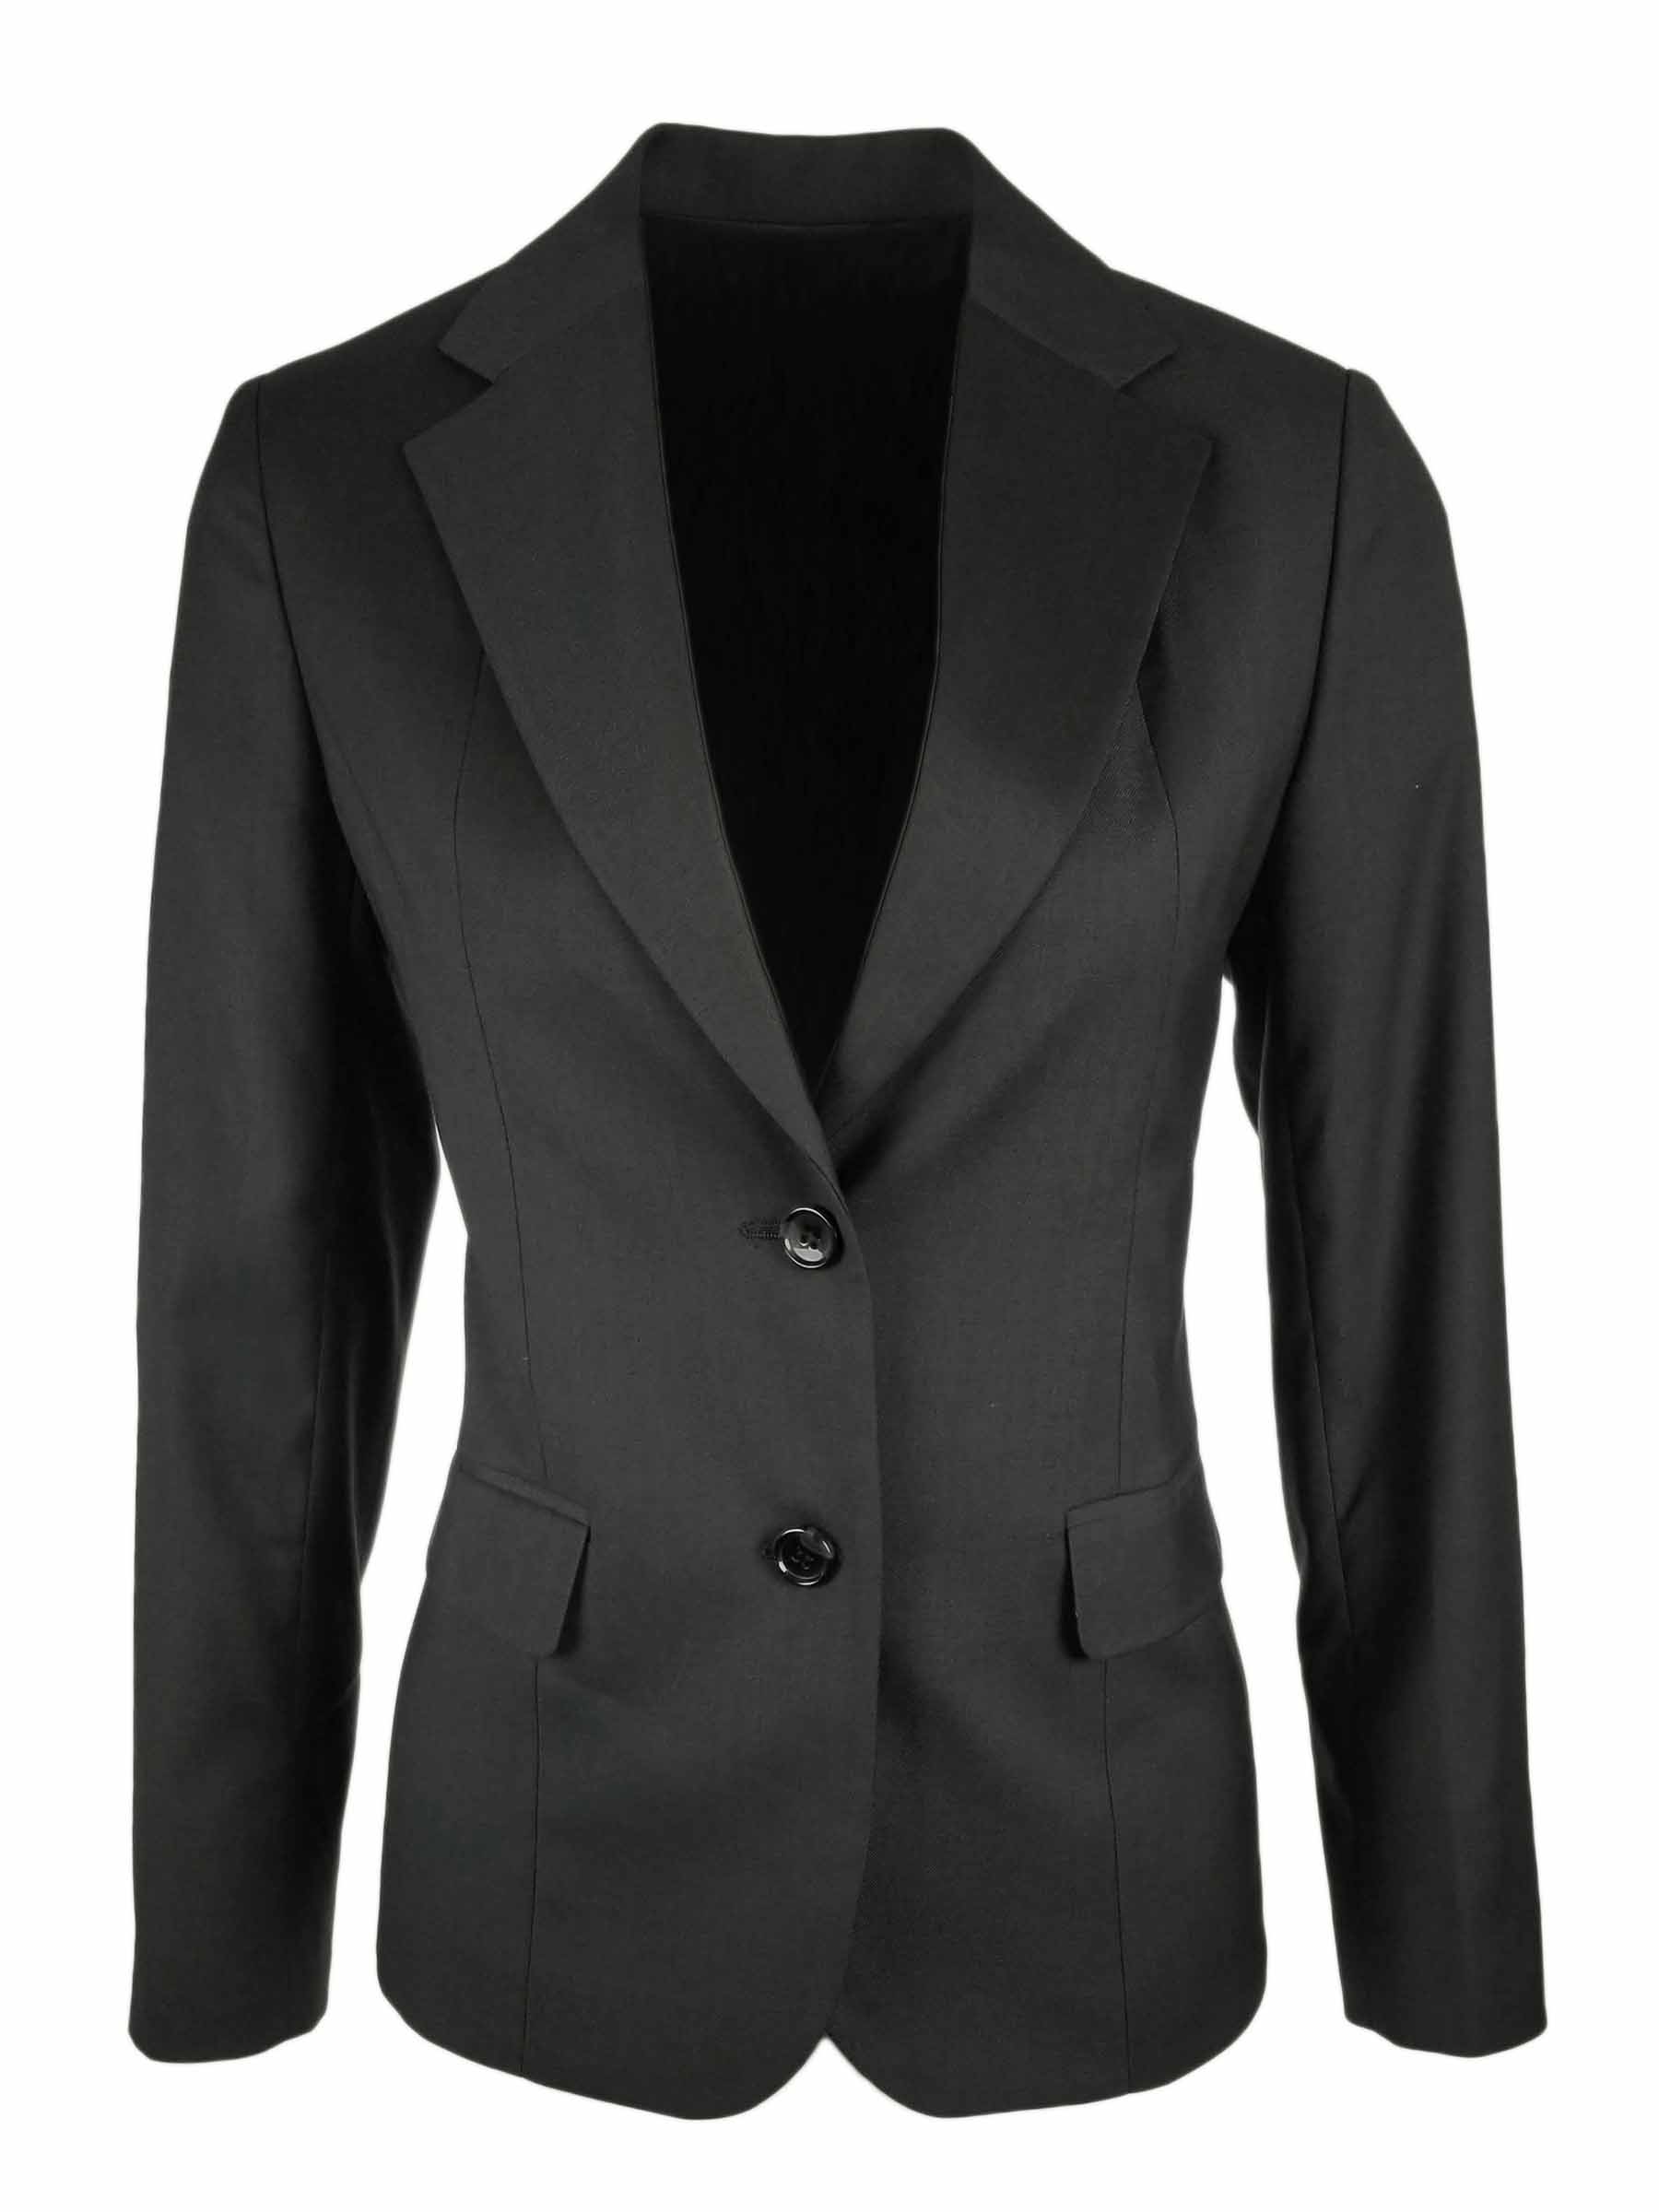 Women's 2 Button Wool Blend Jacket - Black - Uniform Edit